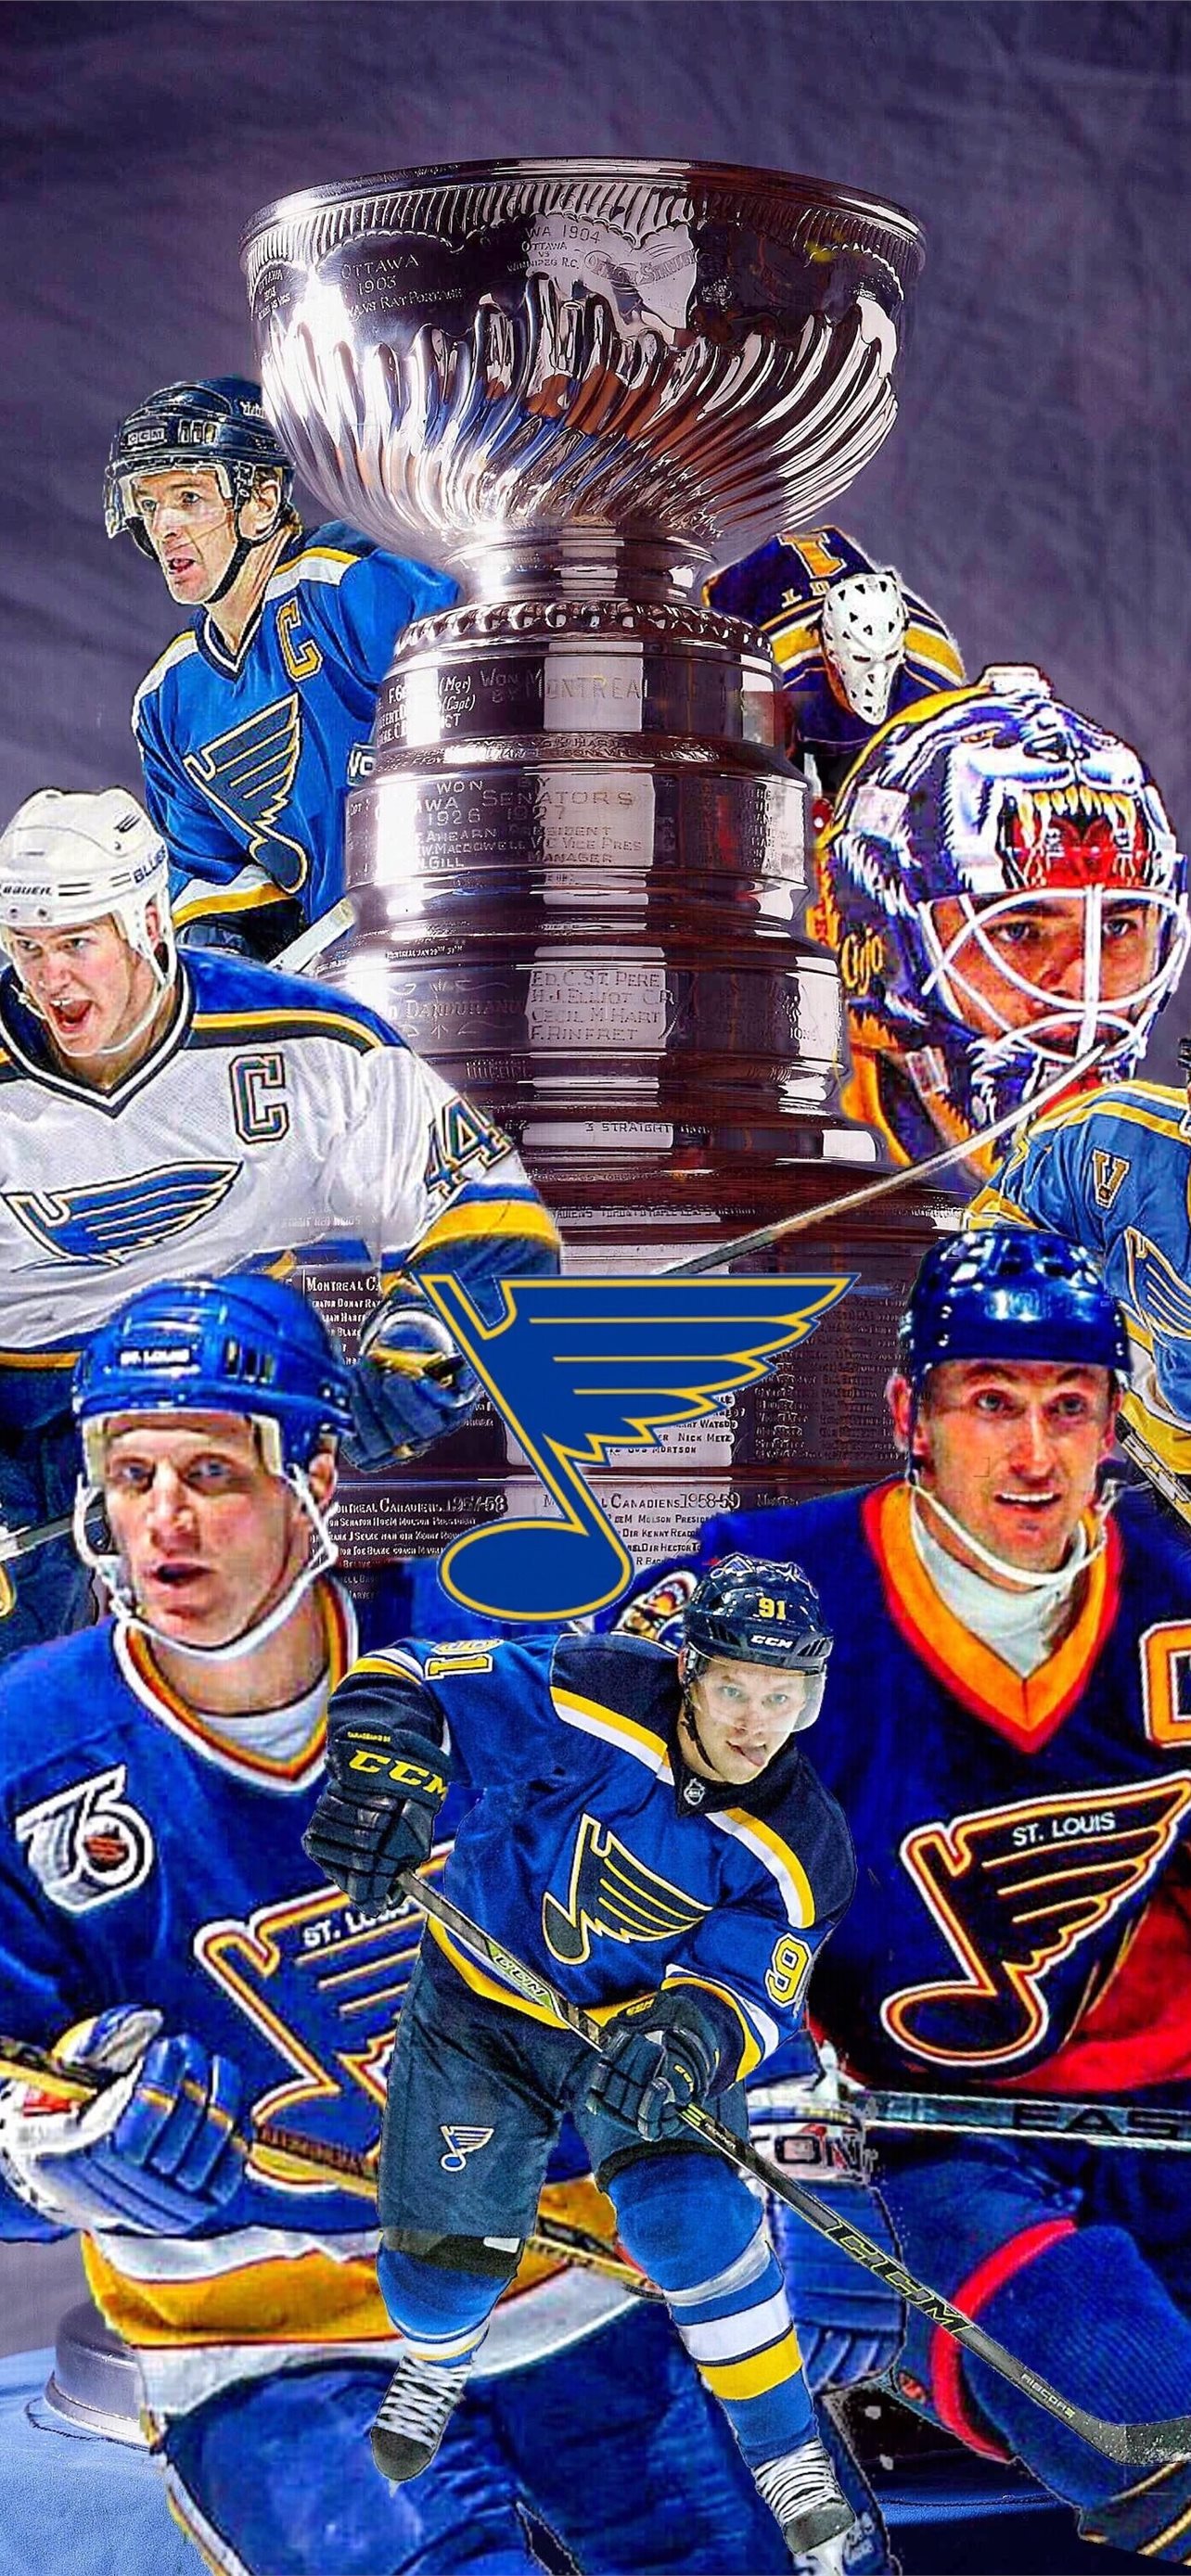 St Louis Blues (NHL) iPhone 6/7/8 Lock Screen Wallpaper